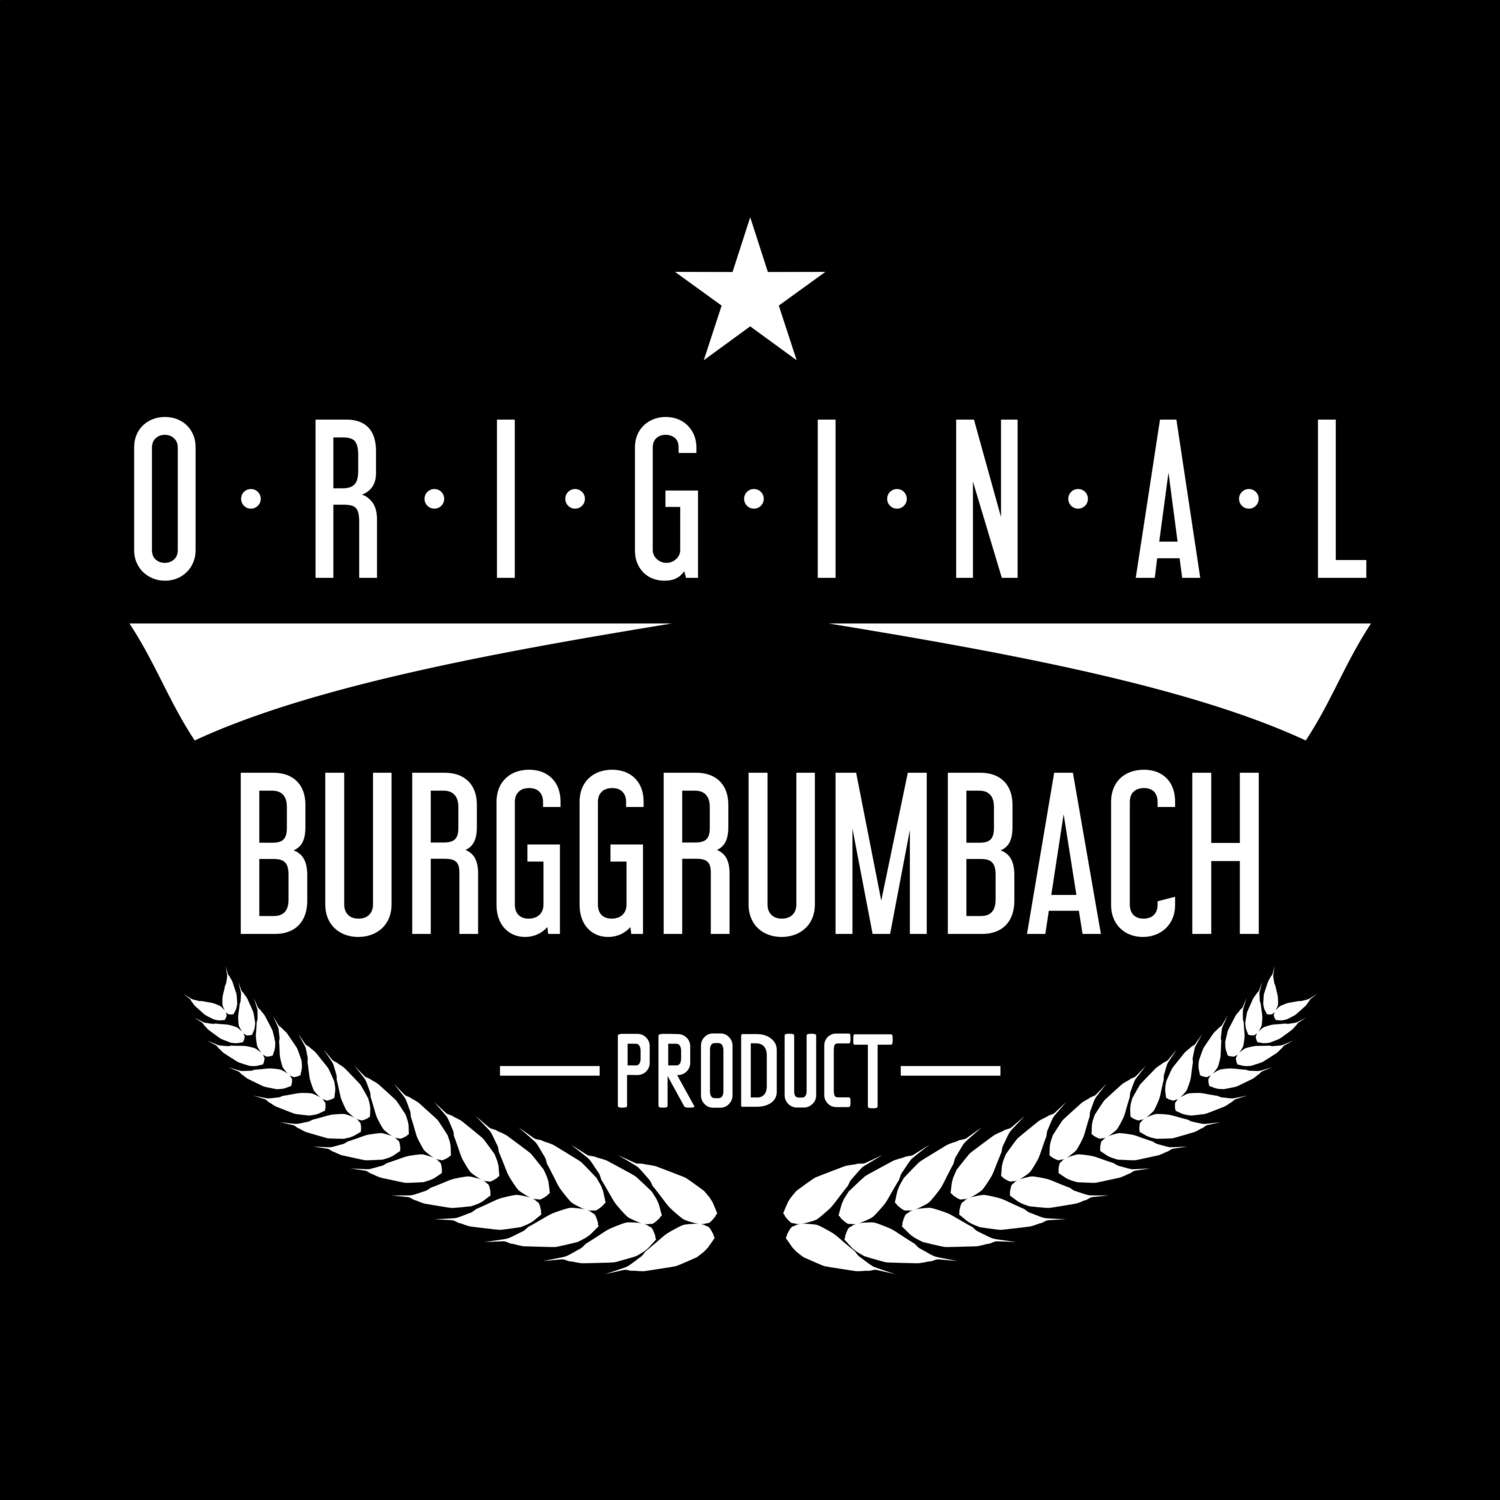 Burggrumbach T-Shirt »Original Product«